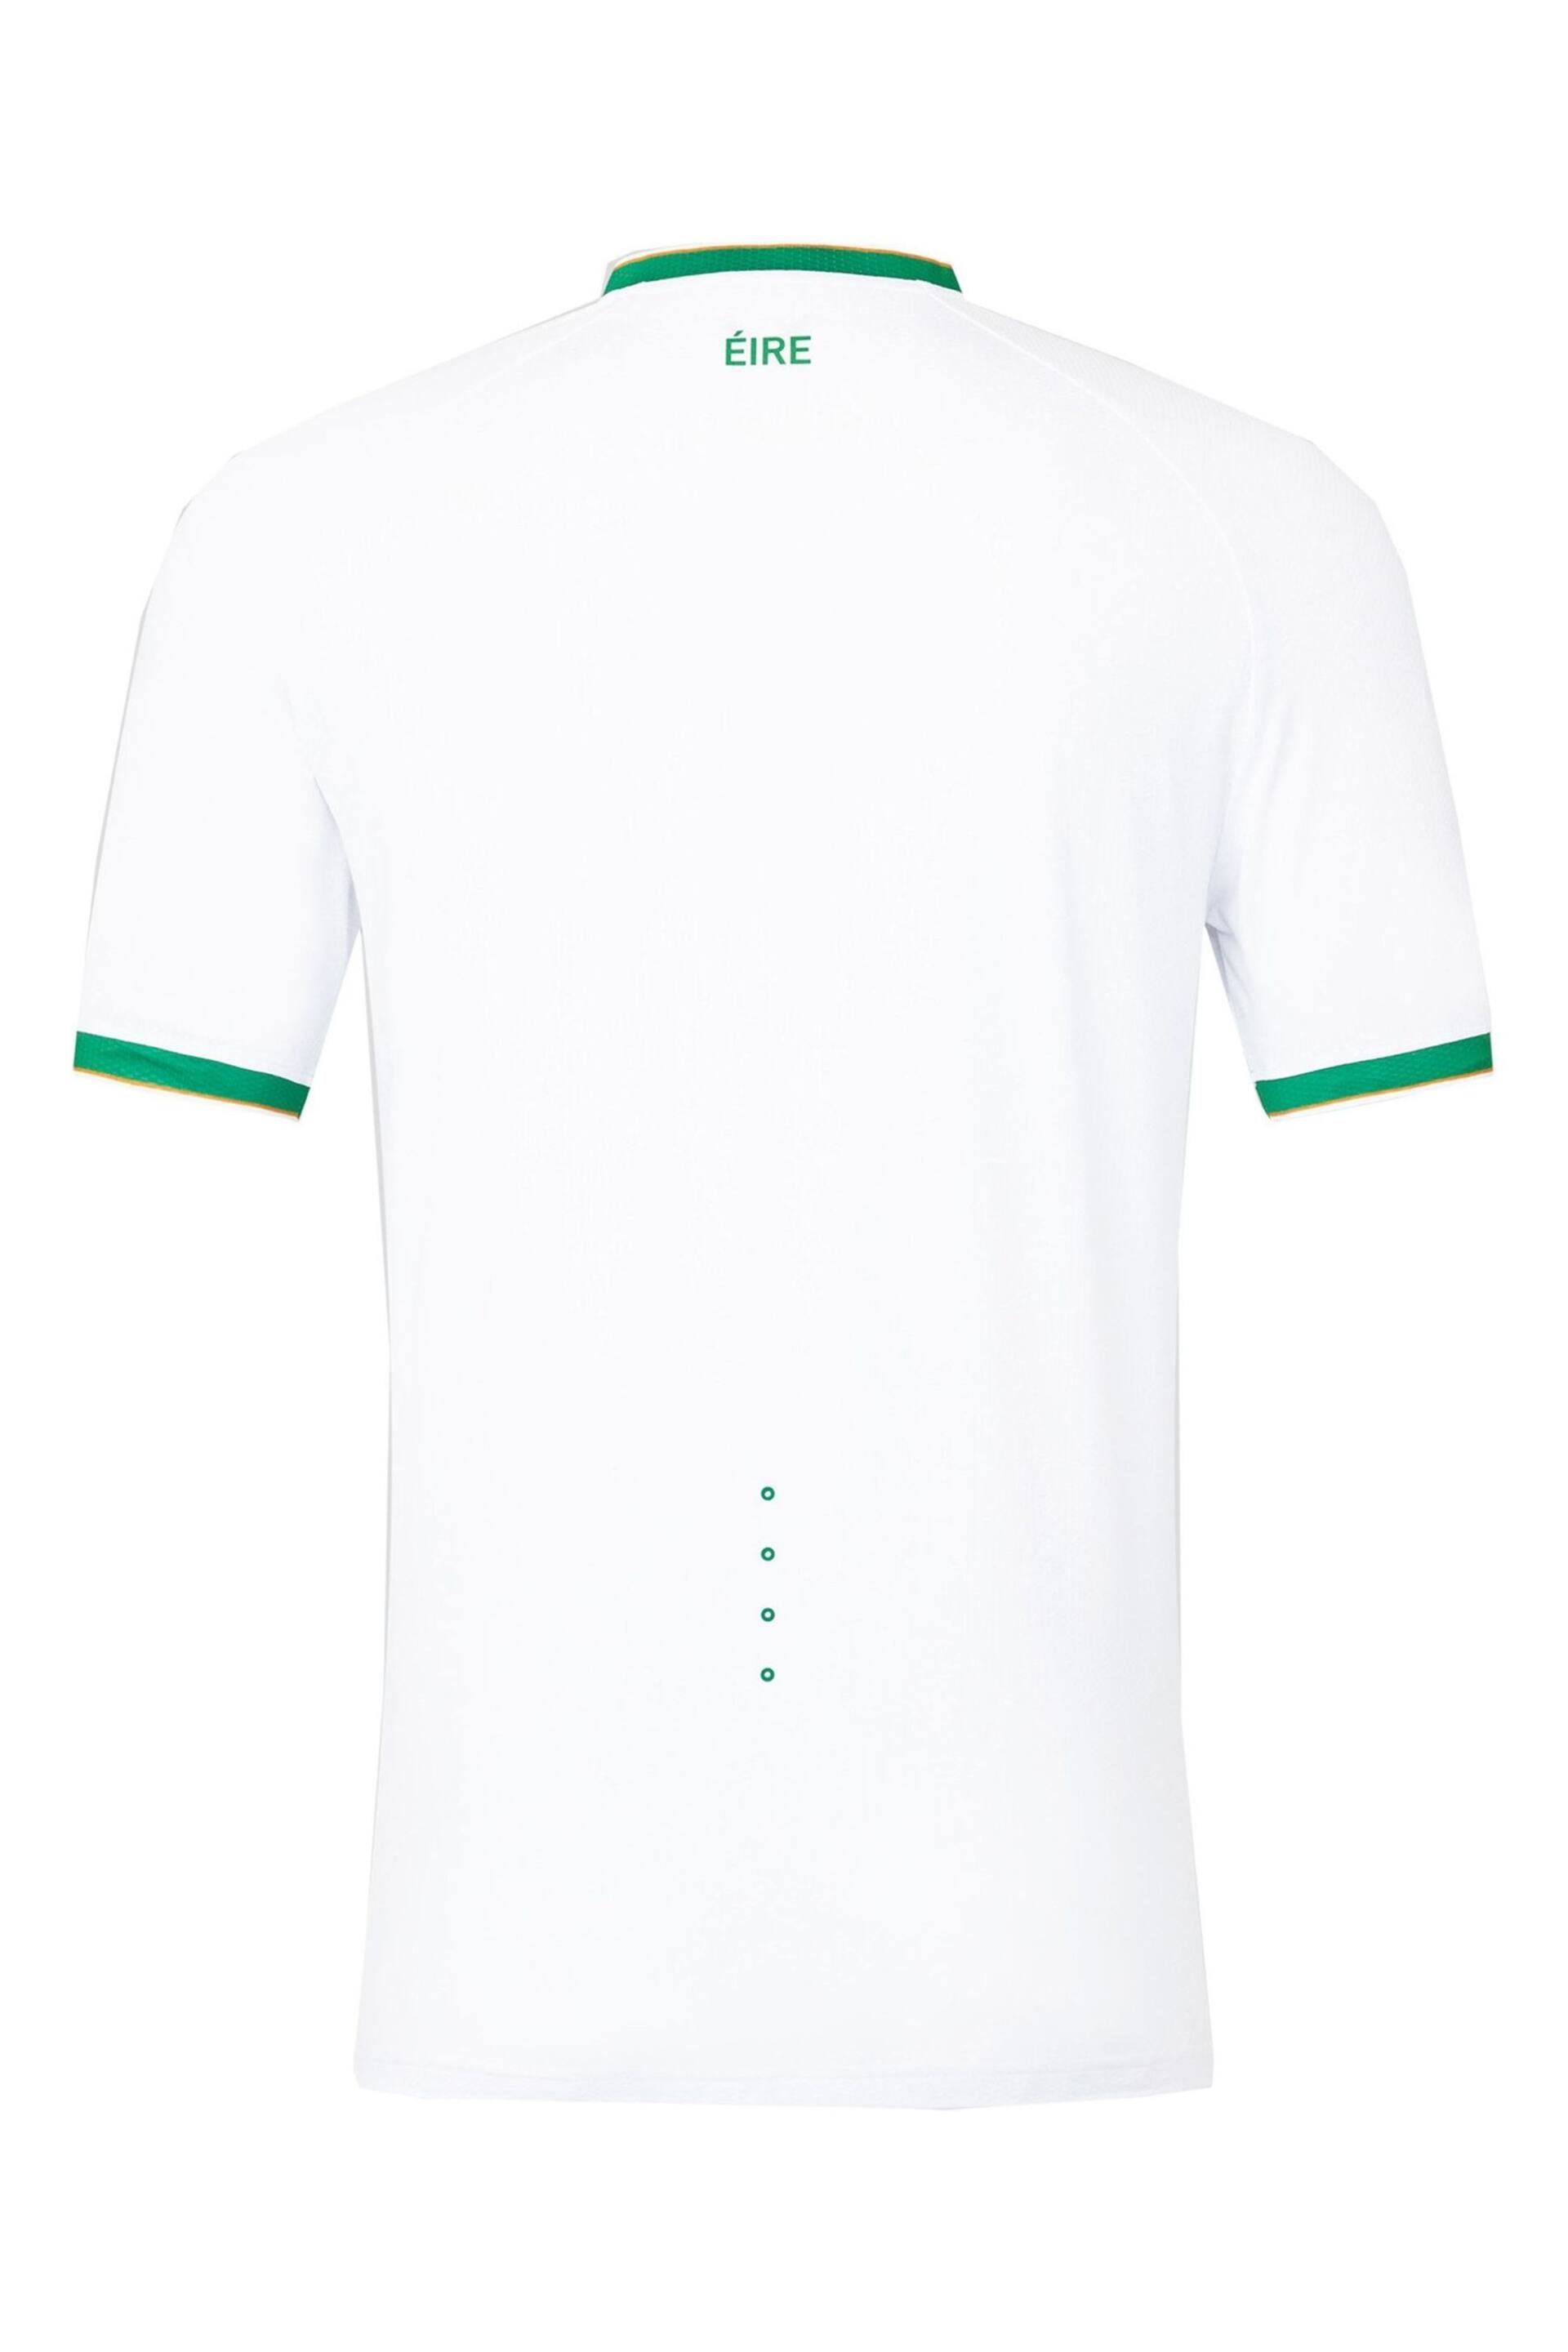 Castore Republic of Ireland Away Pro White Shirt - Image 3 of 5